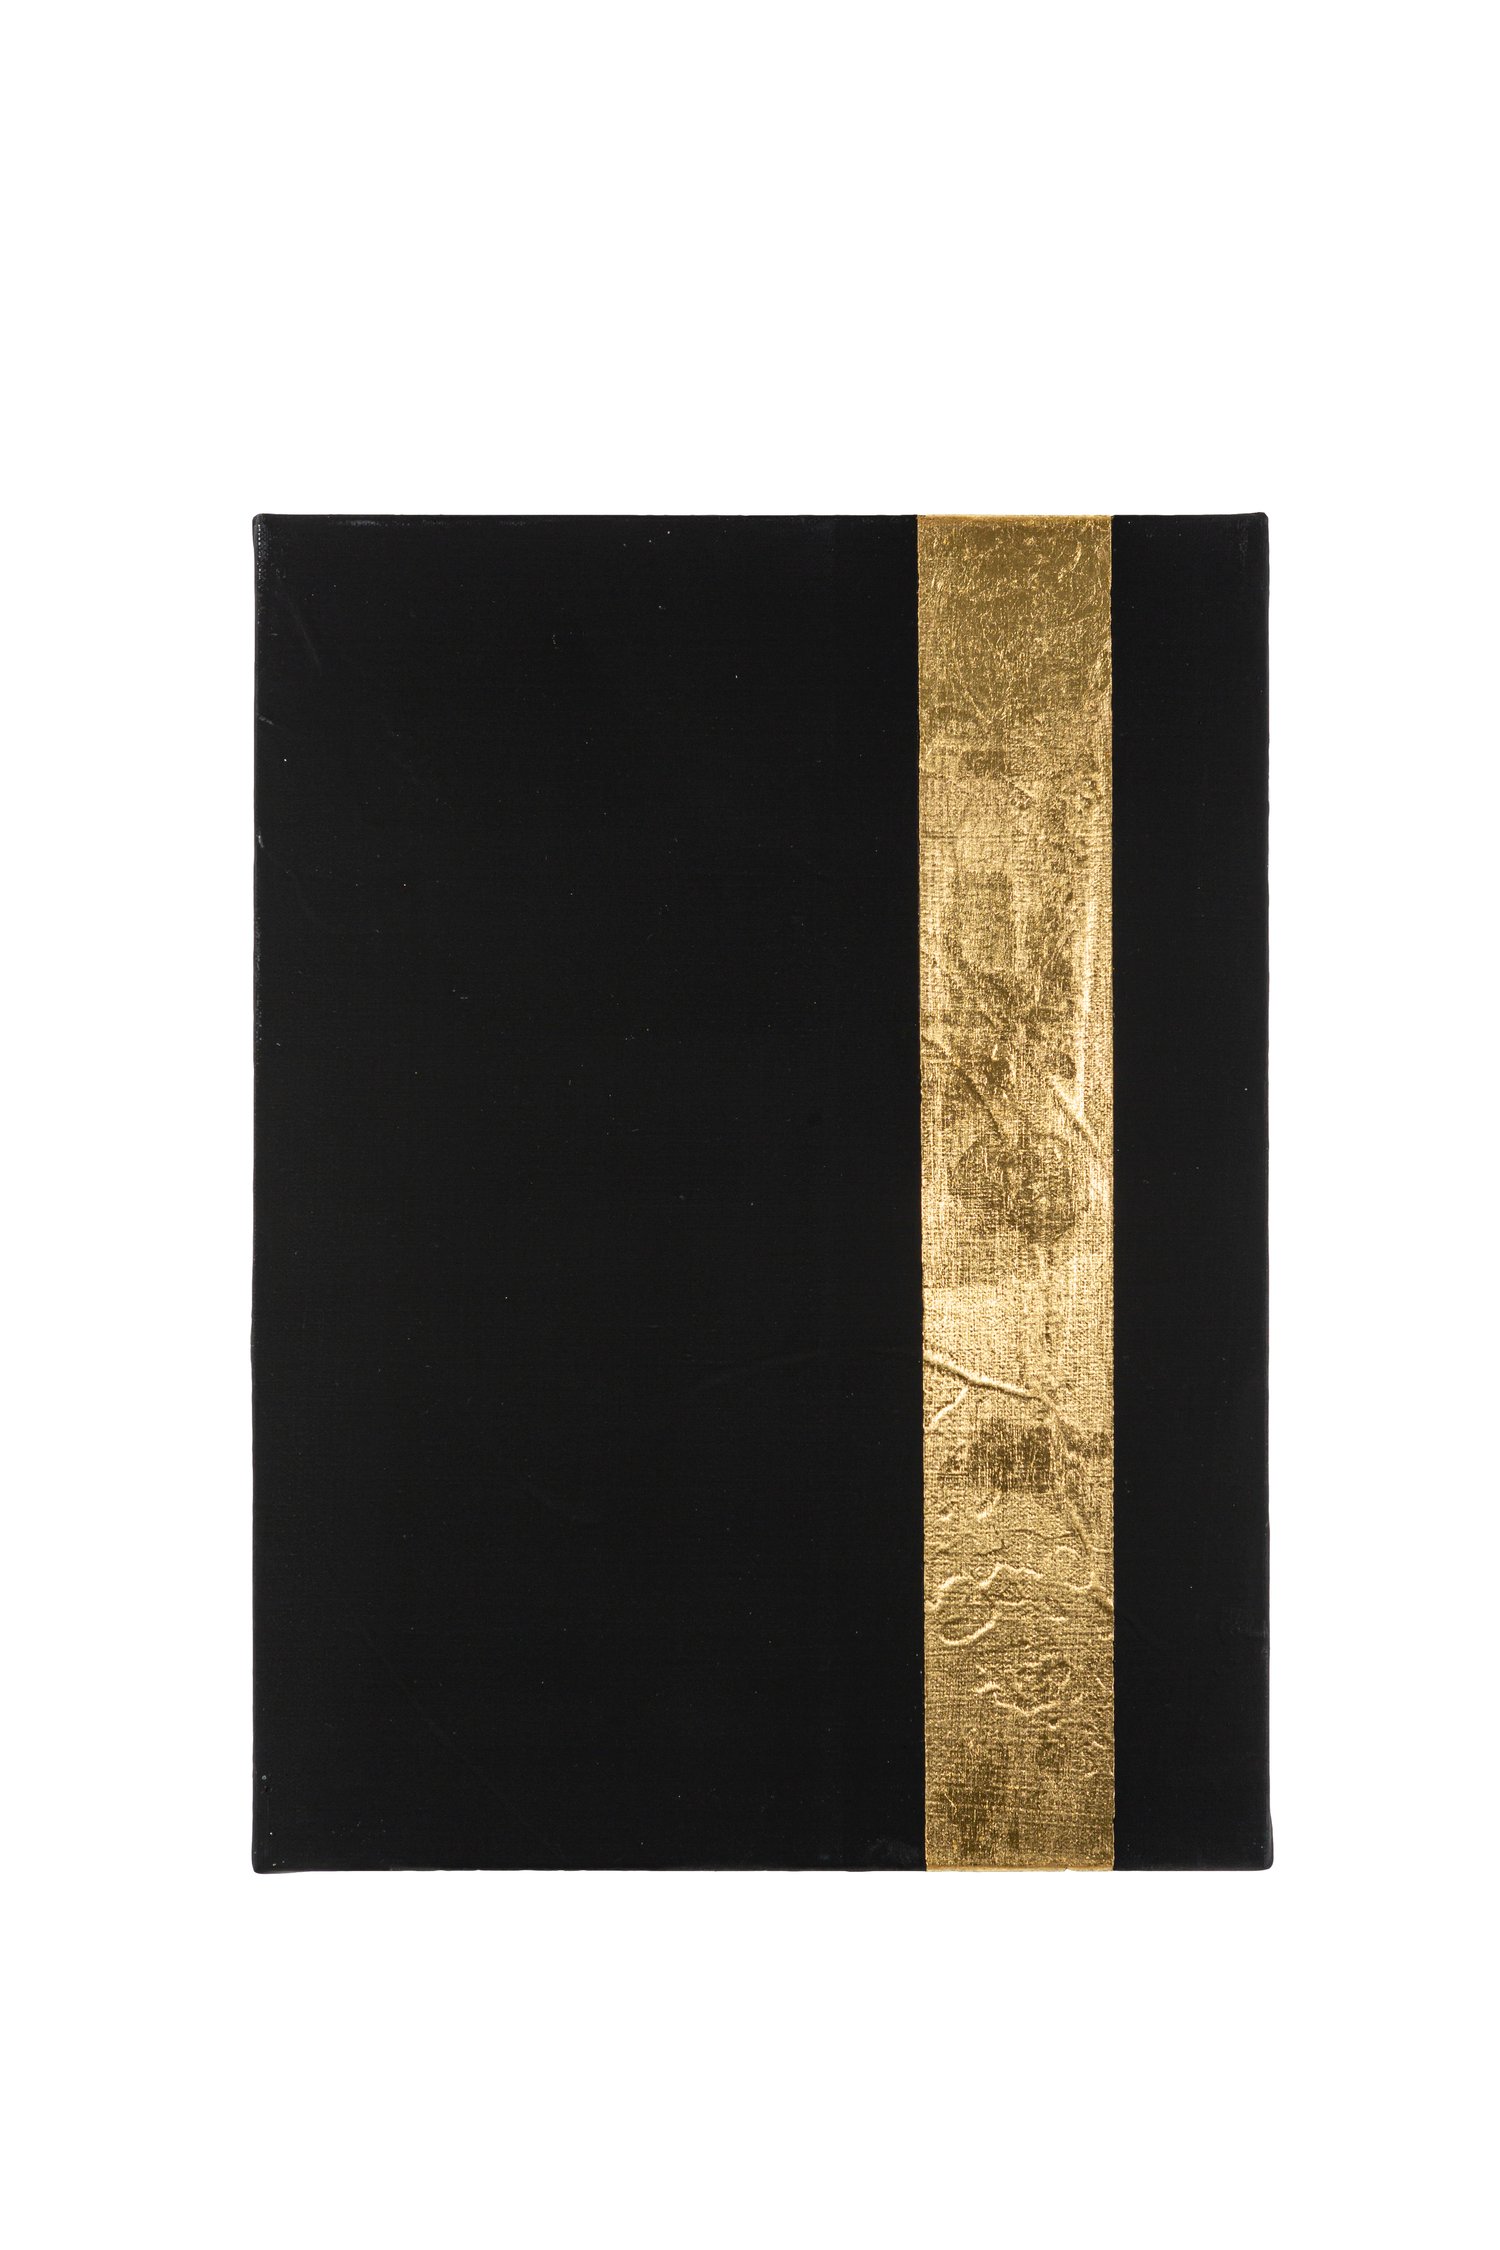 Veining - acrylic and 23 carat gold on canvas, 30x40 cm